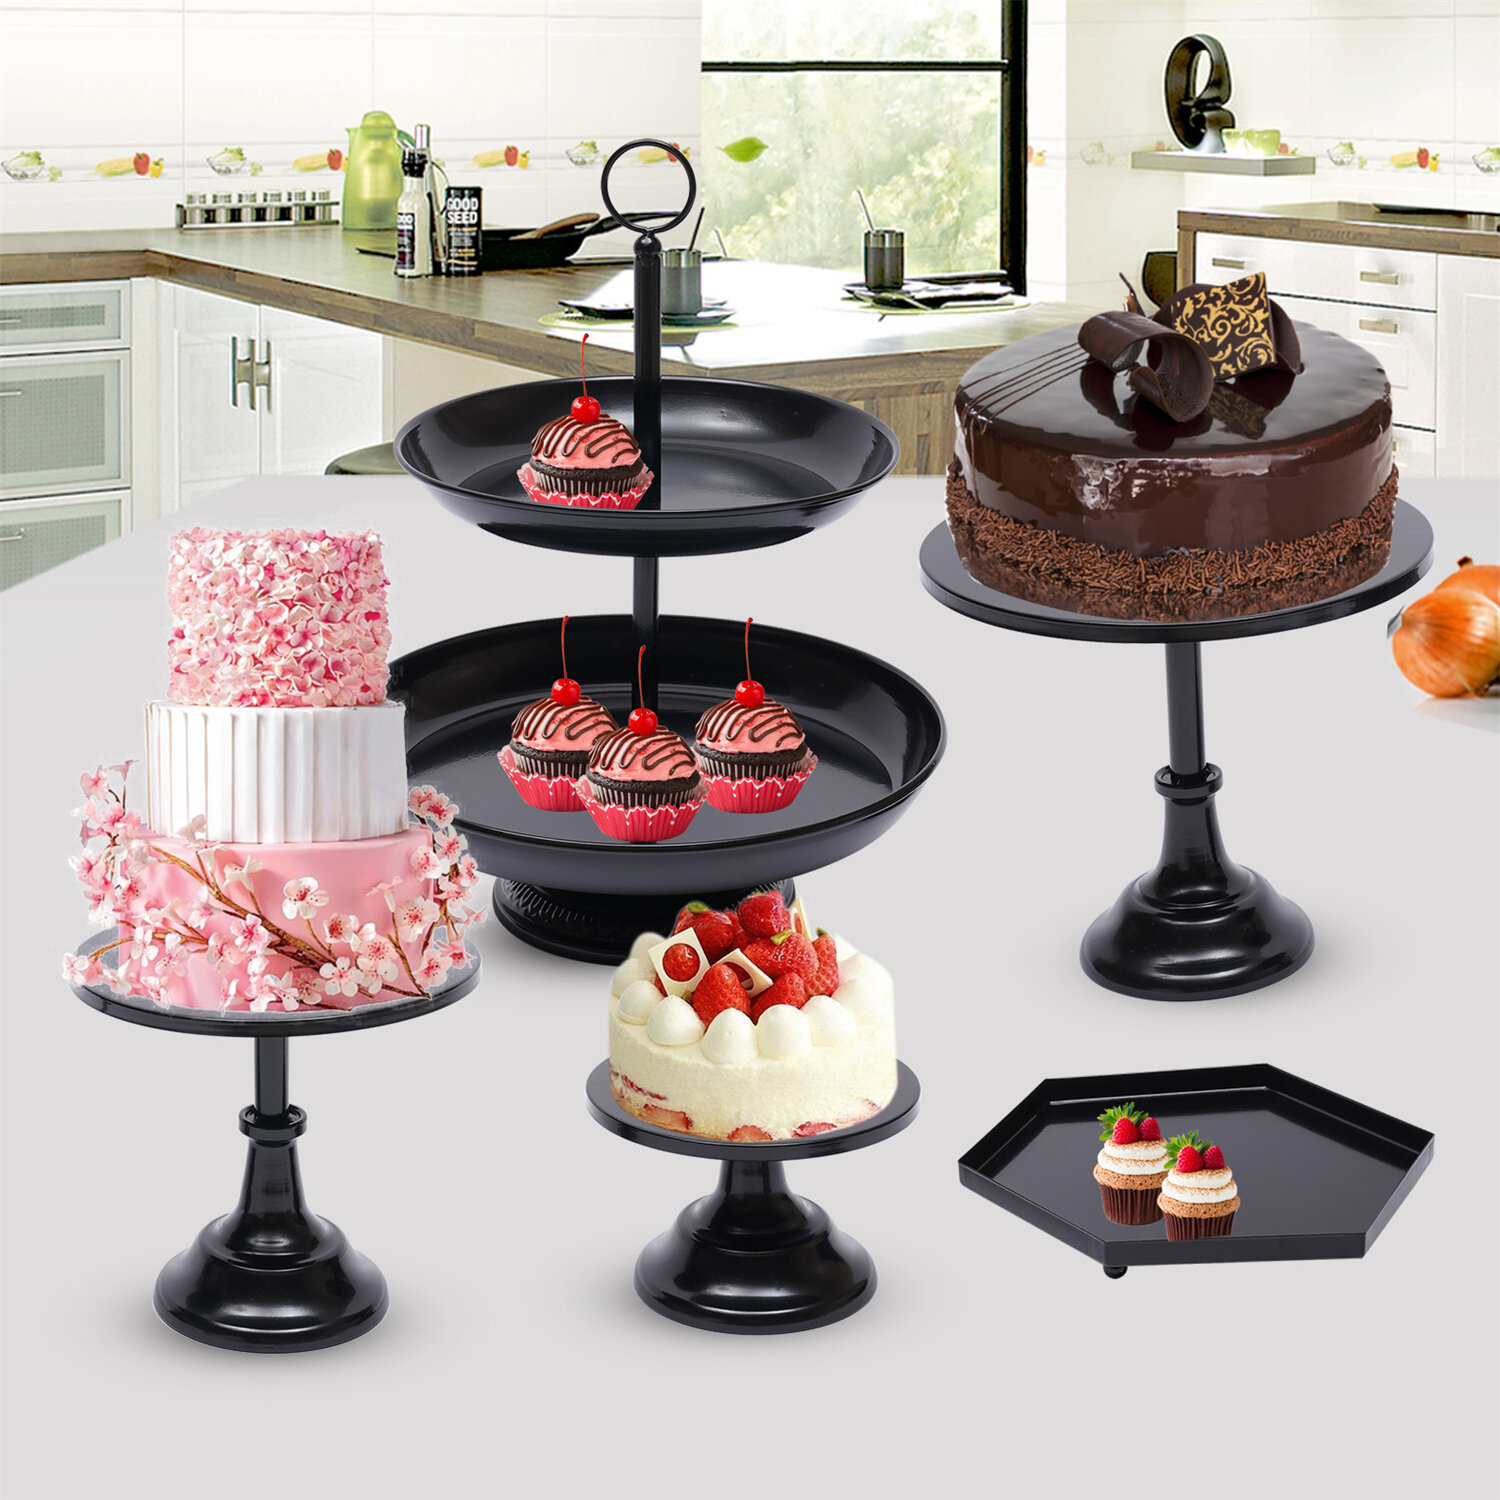 cake pop holder - Google Search | Cake pop stands, Diy cake pops, Diy cake  pop stand